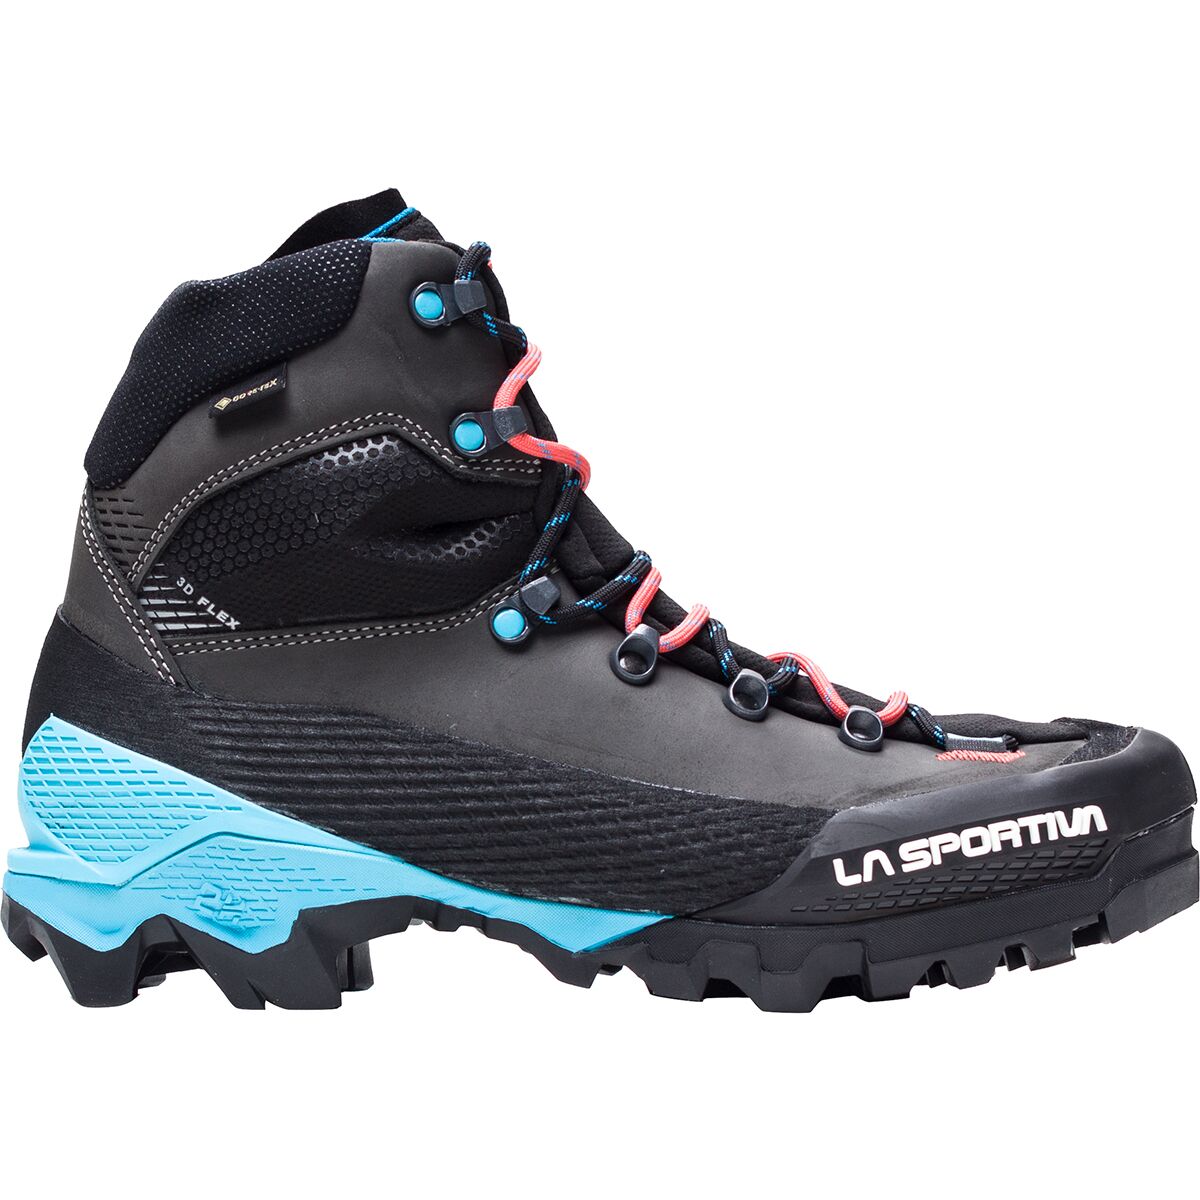 Aequilibrium LT GTX Mountaineering Boot - Women